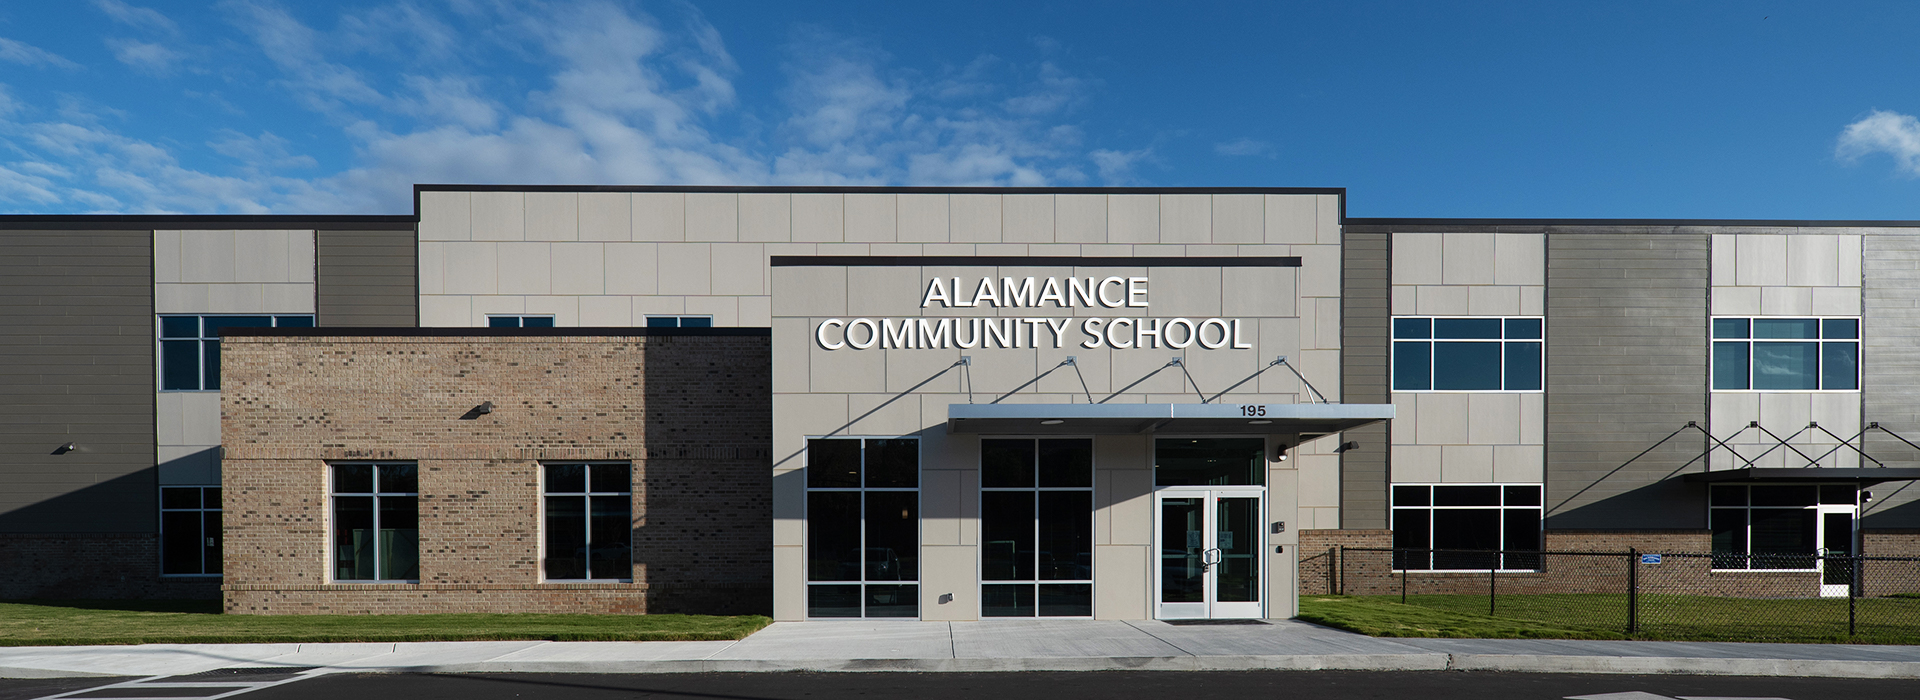 Alamance Community School